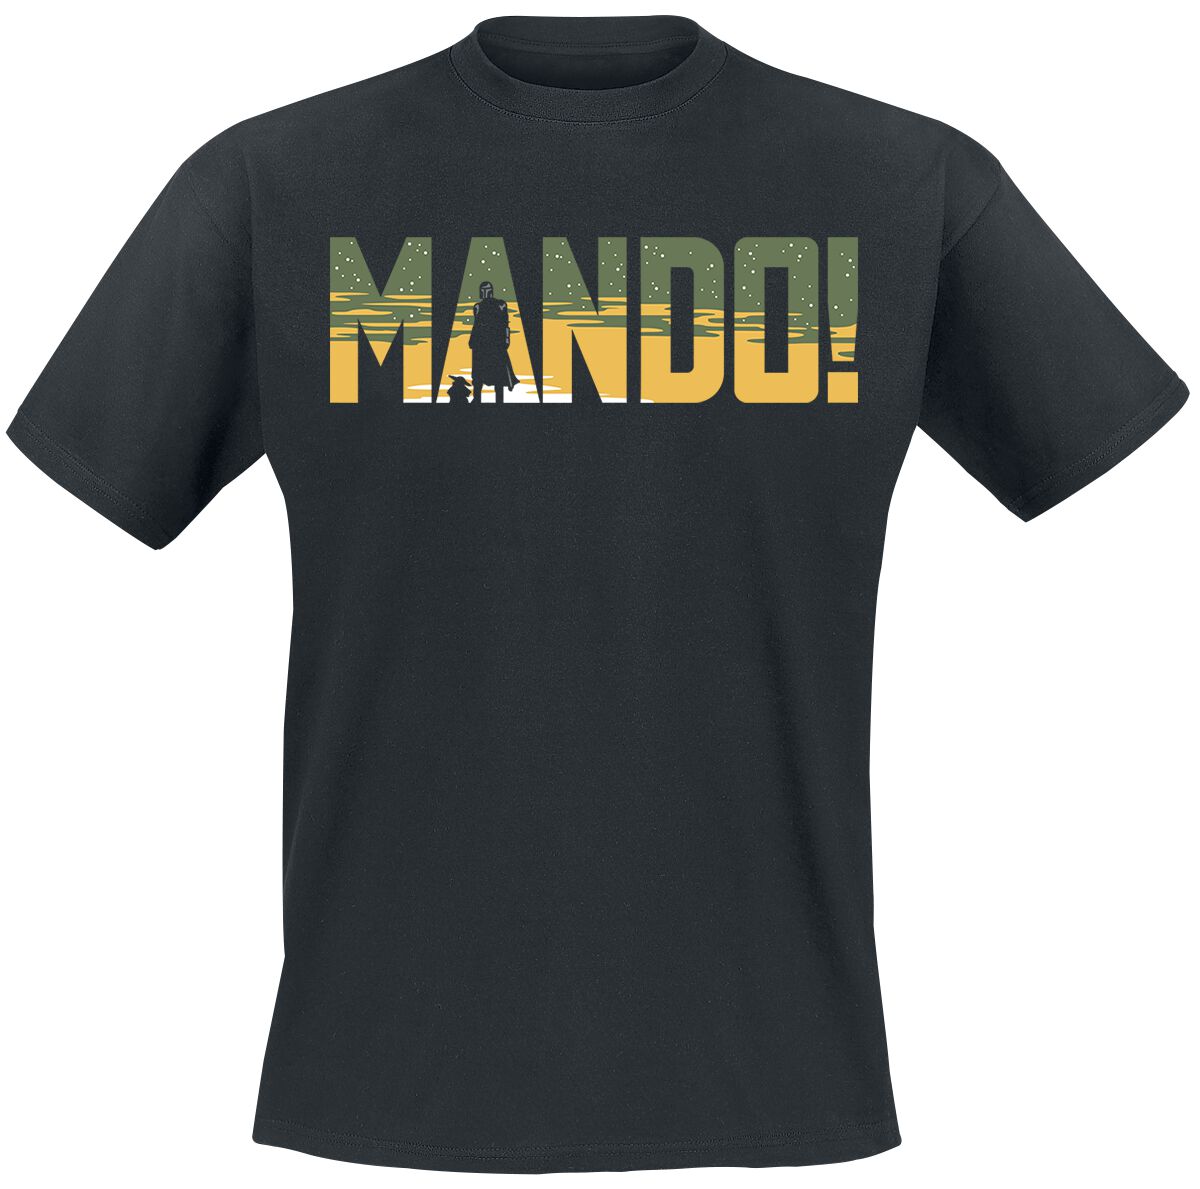 Star Wars The Mandalorian - Season 3 - Mando T-Shirt schwarz in L